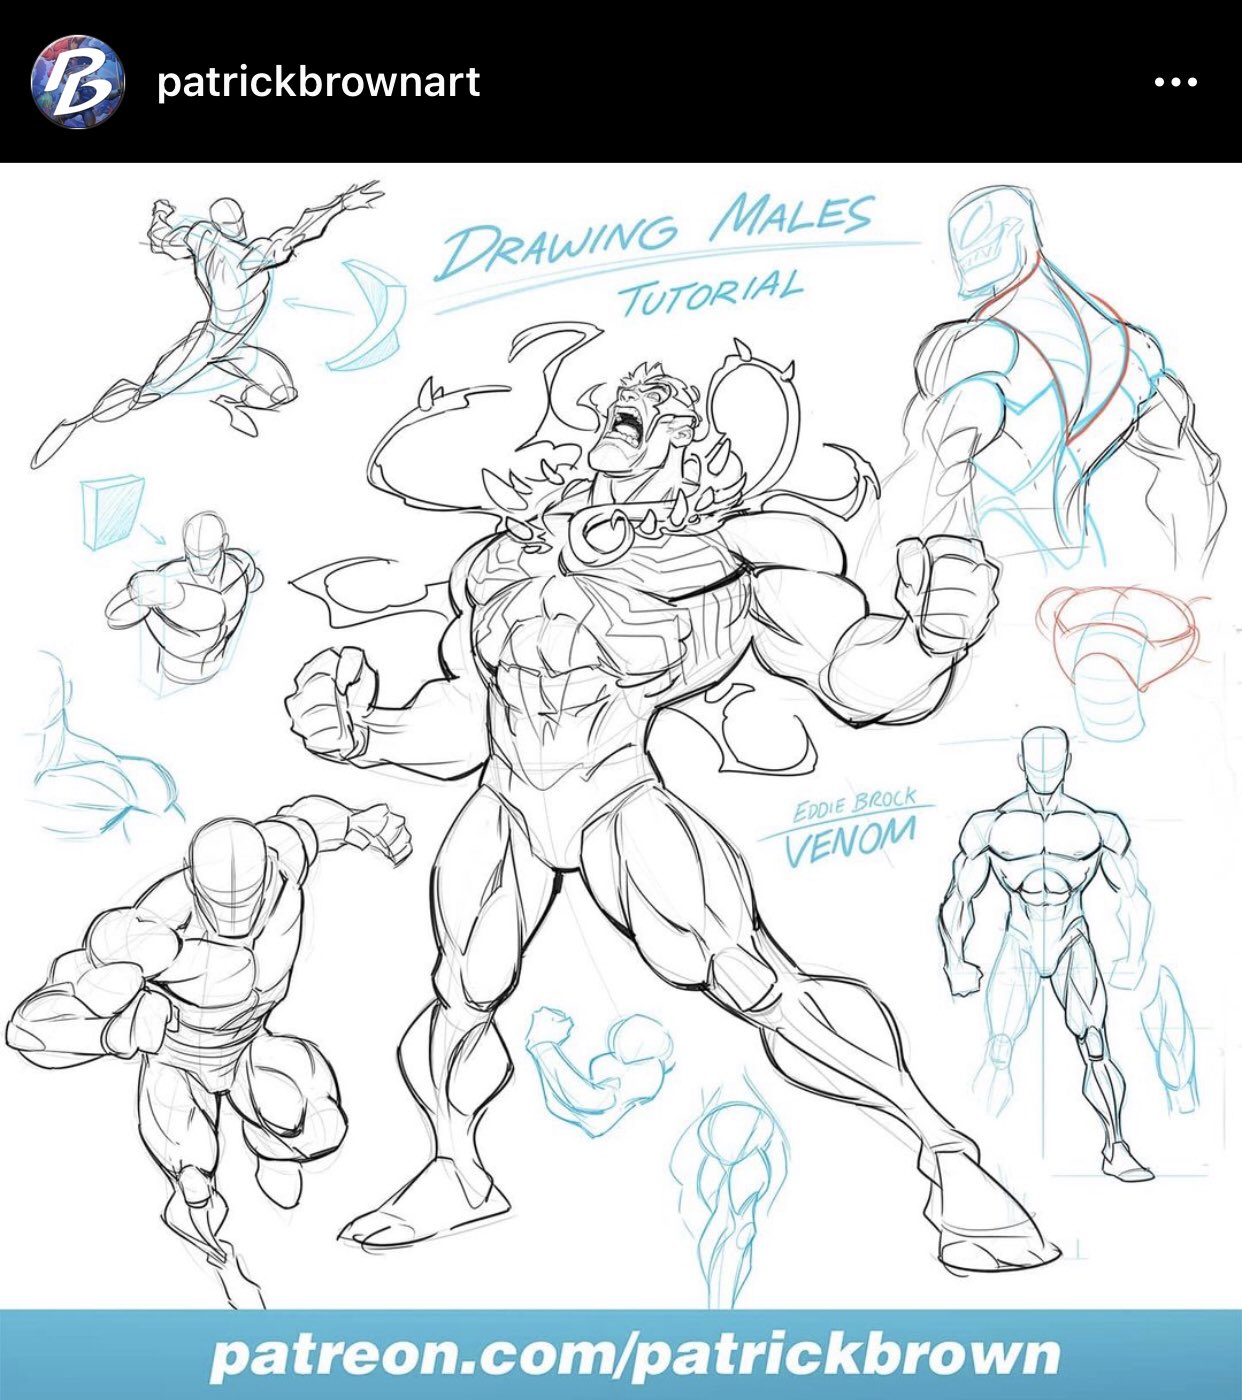 BondPatrick Brown sketch  Artist inspiration Character design  tutorial Drawings